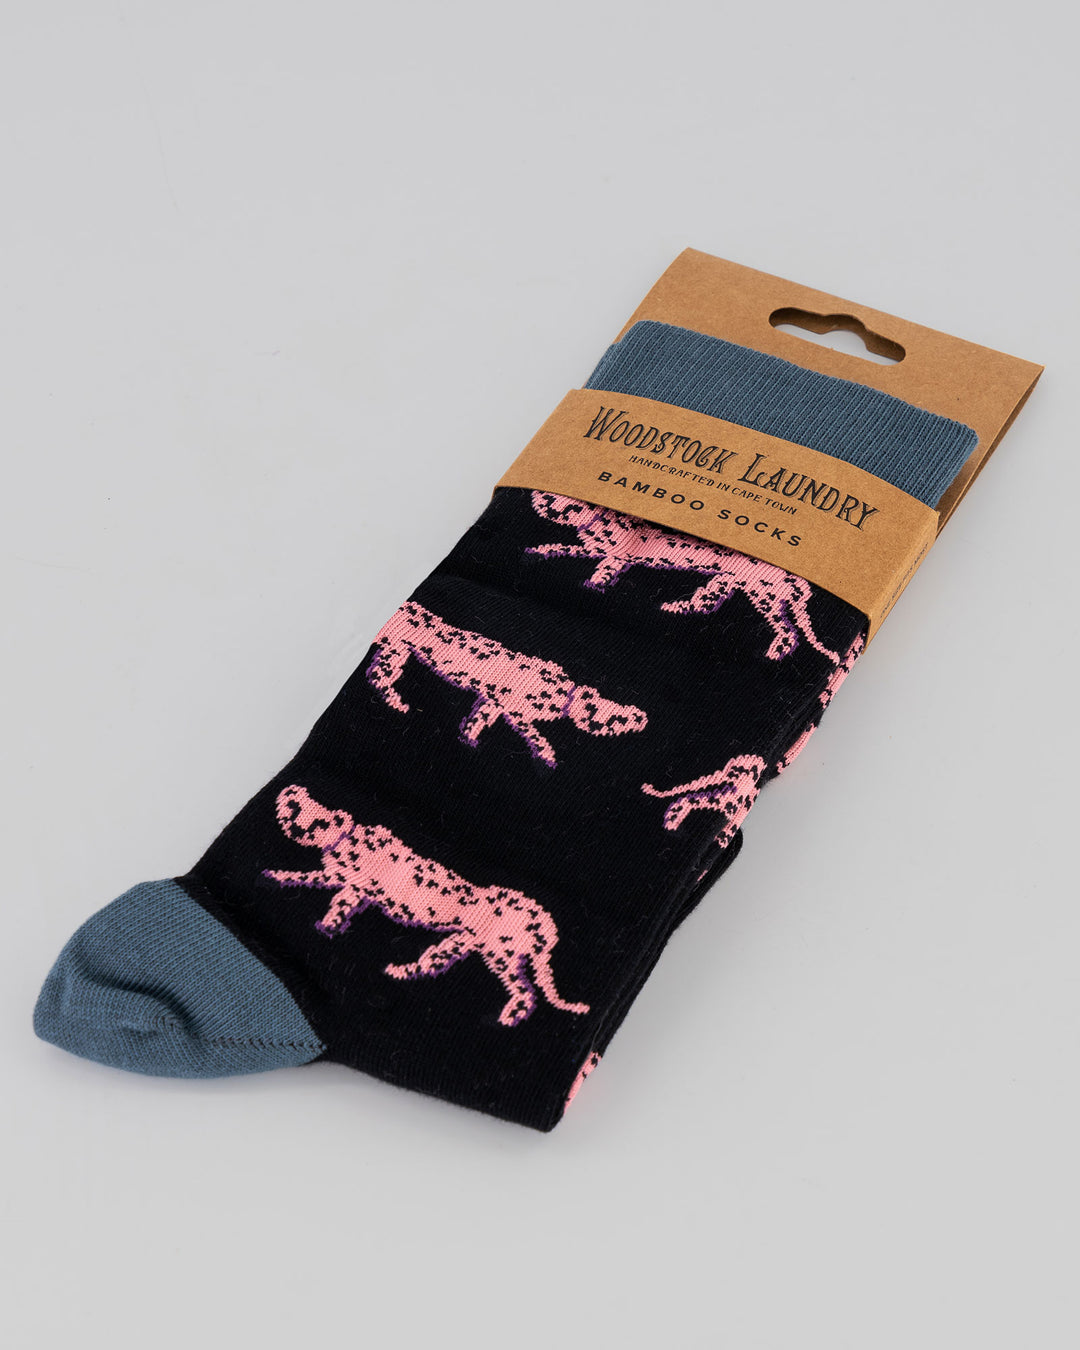 Socks Pink Cheetahs Charcoal Packaging - Woodstock Laundry